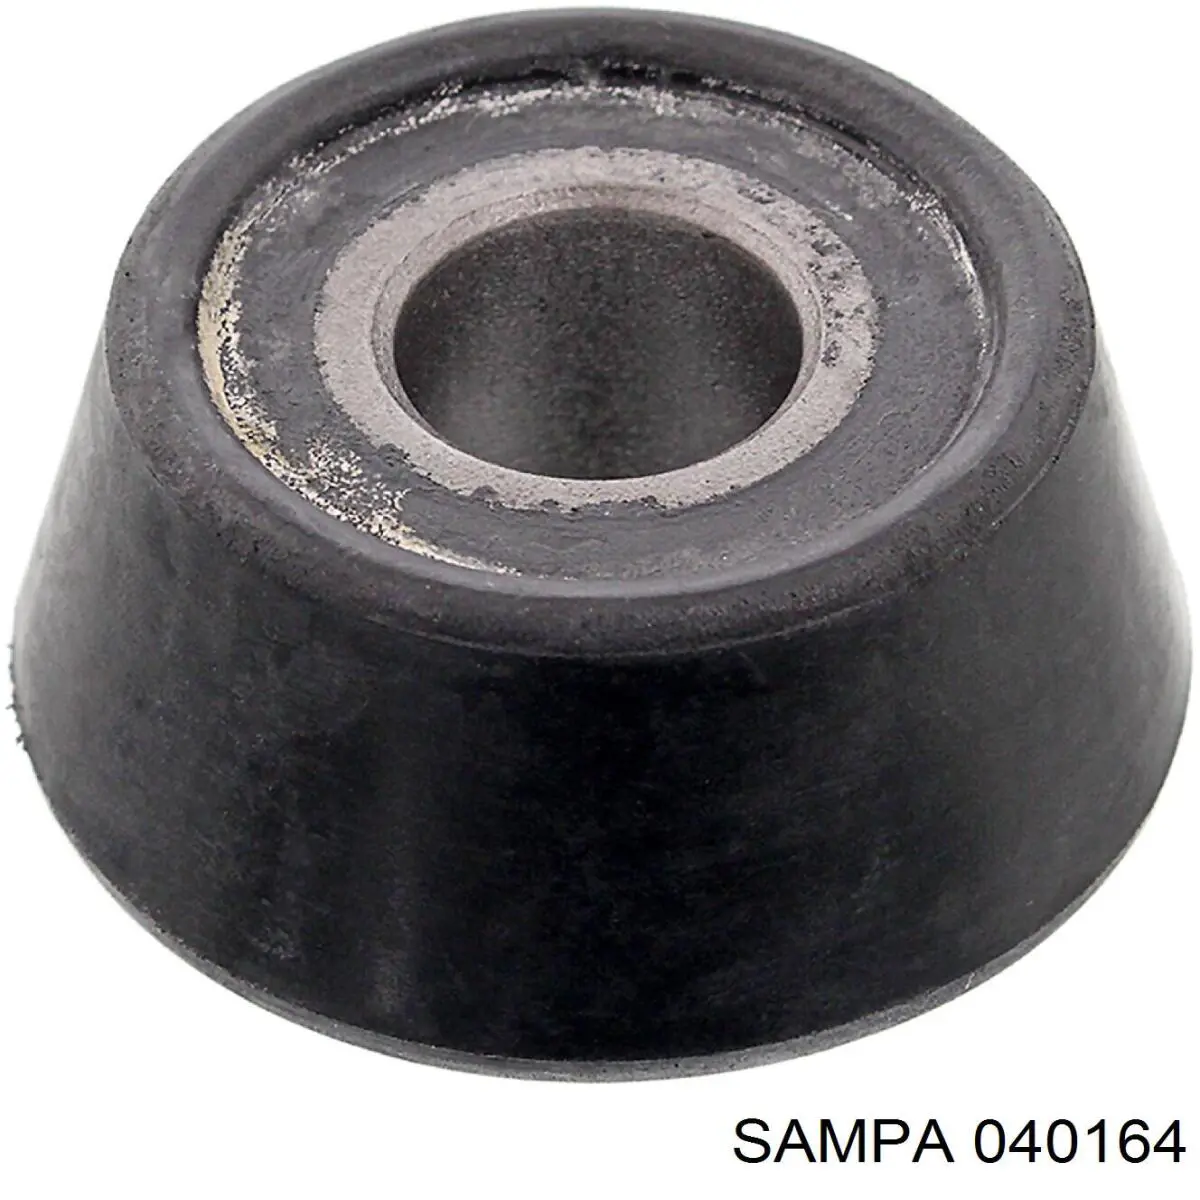 040.164 Sampa Otomotiv‏ silentblock de estabilizador trasero